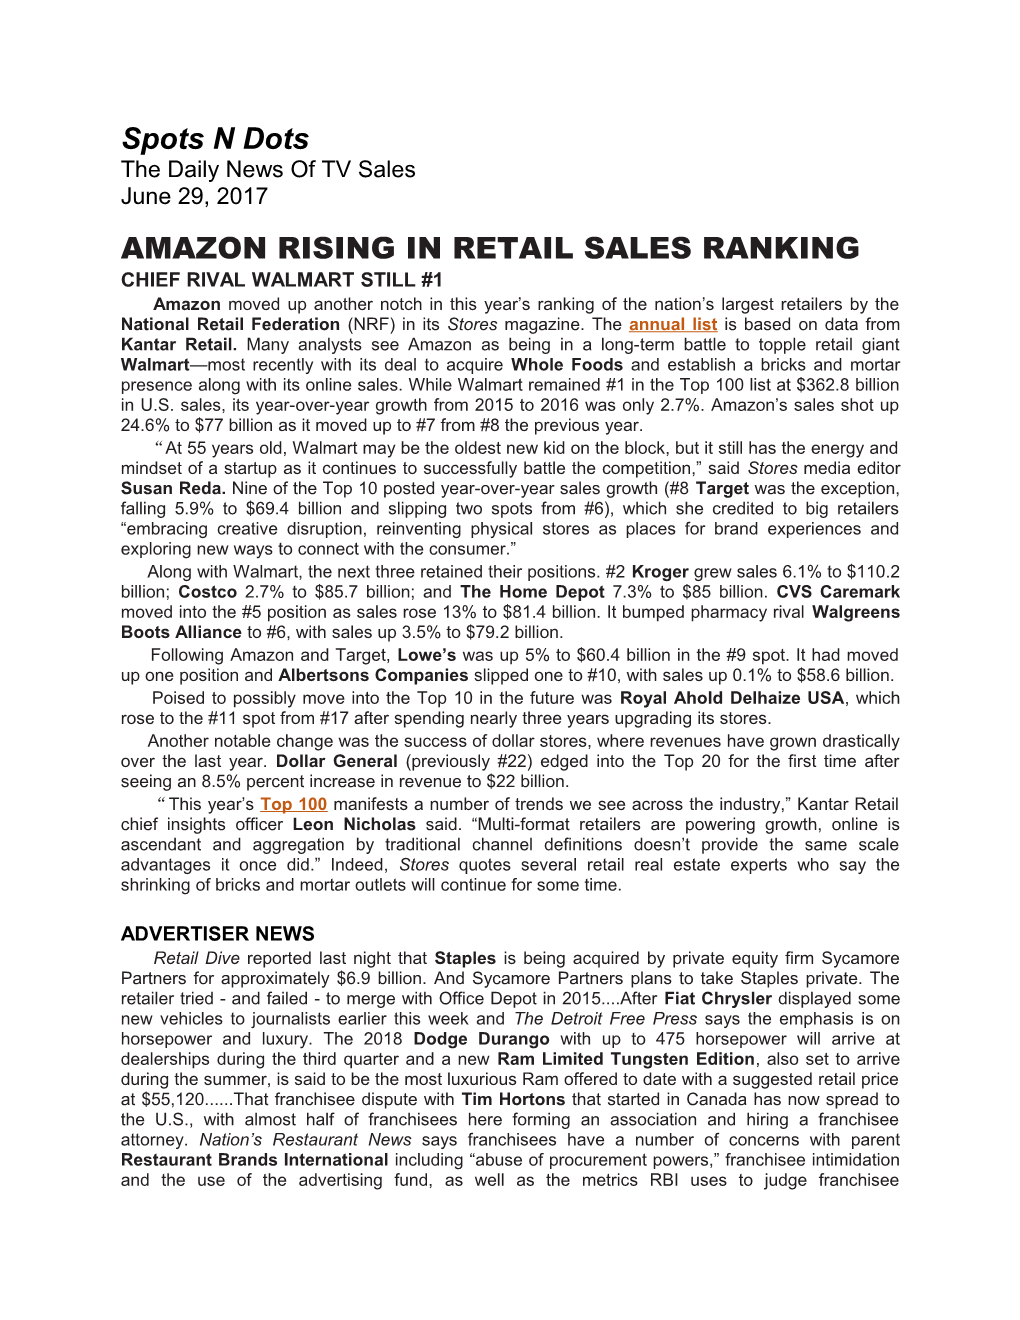 Amazon Rising in Retail Sales Ranking